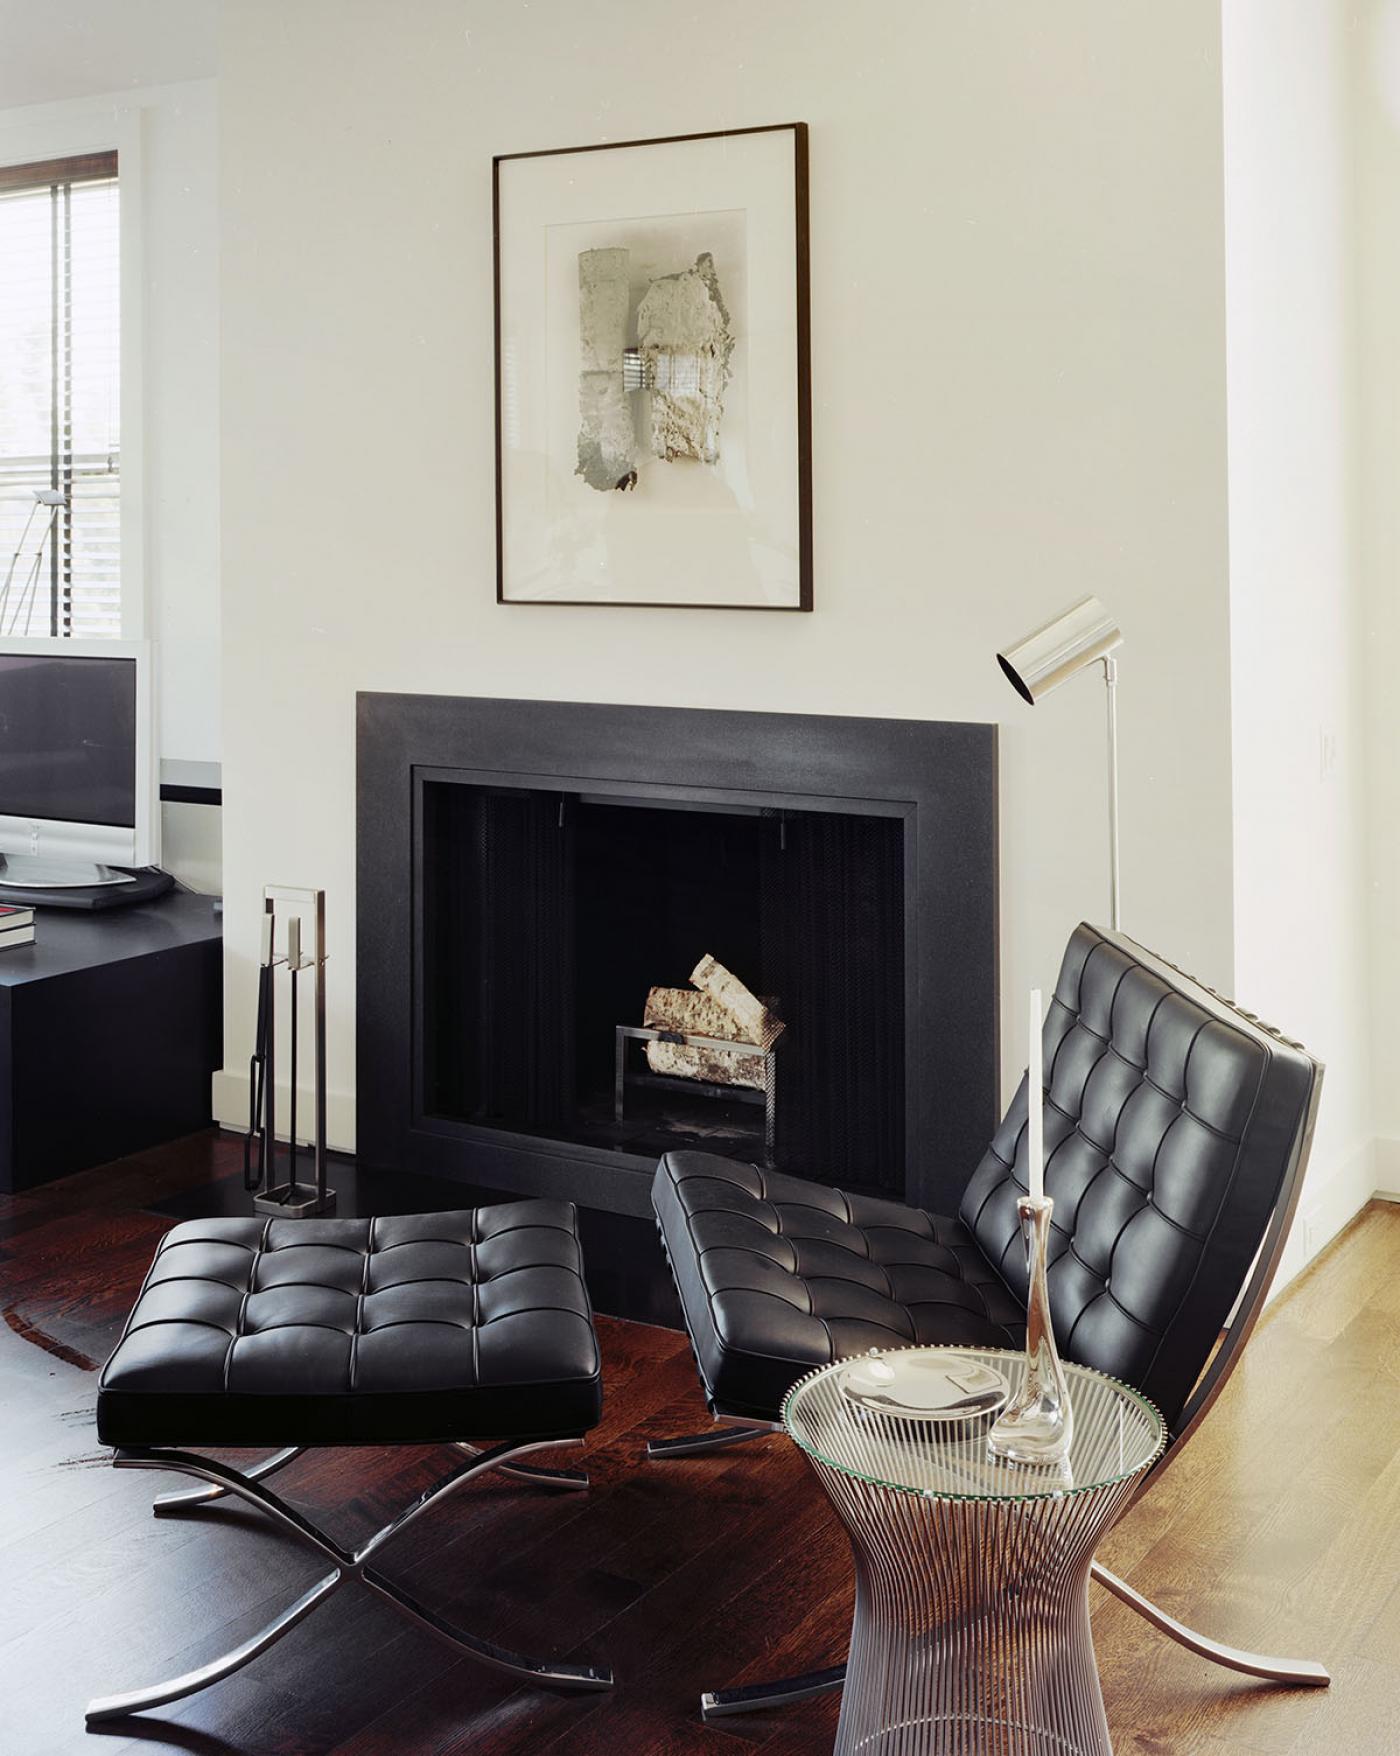 Michael Kors Penthouse - NYC - New York Interior Designer - Glenn